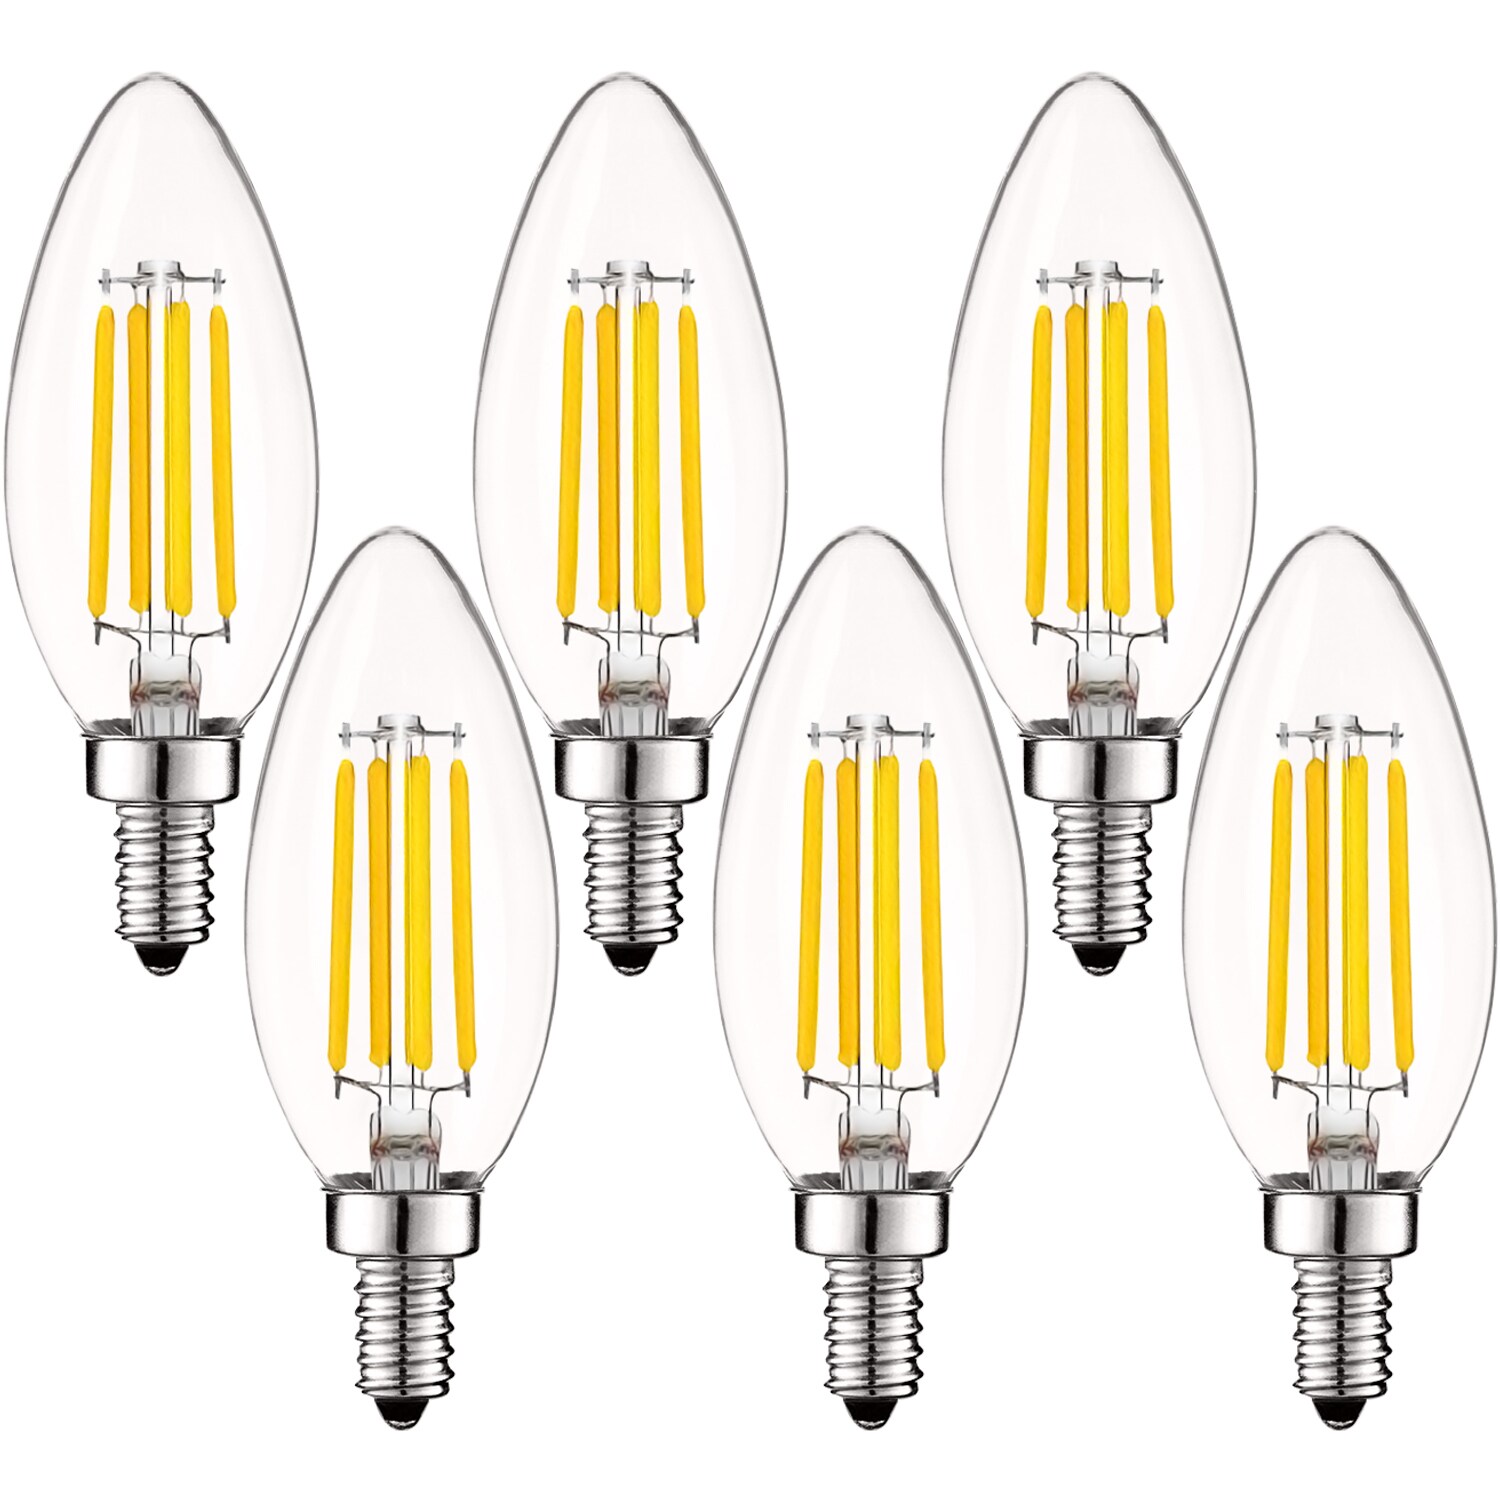 10 x Searchlight Pack 4W E14 LED filament candle Light Bulbs WARM WHITE